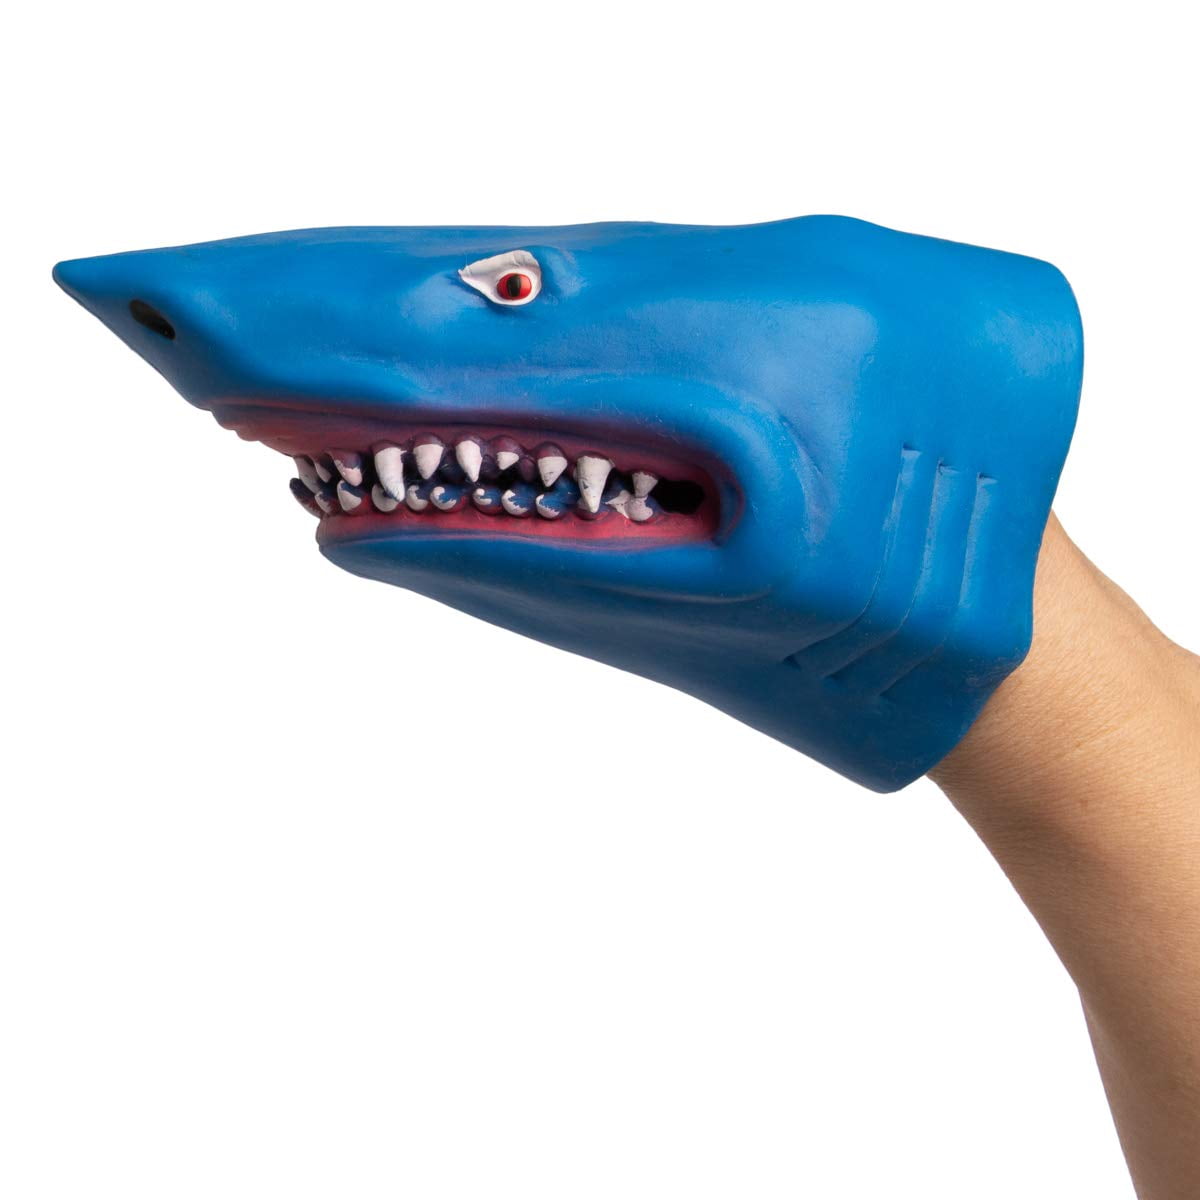 Schylling I00072833 Shark Hand Puppet for sale online 